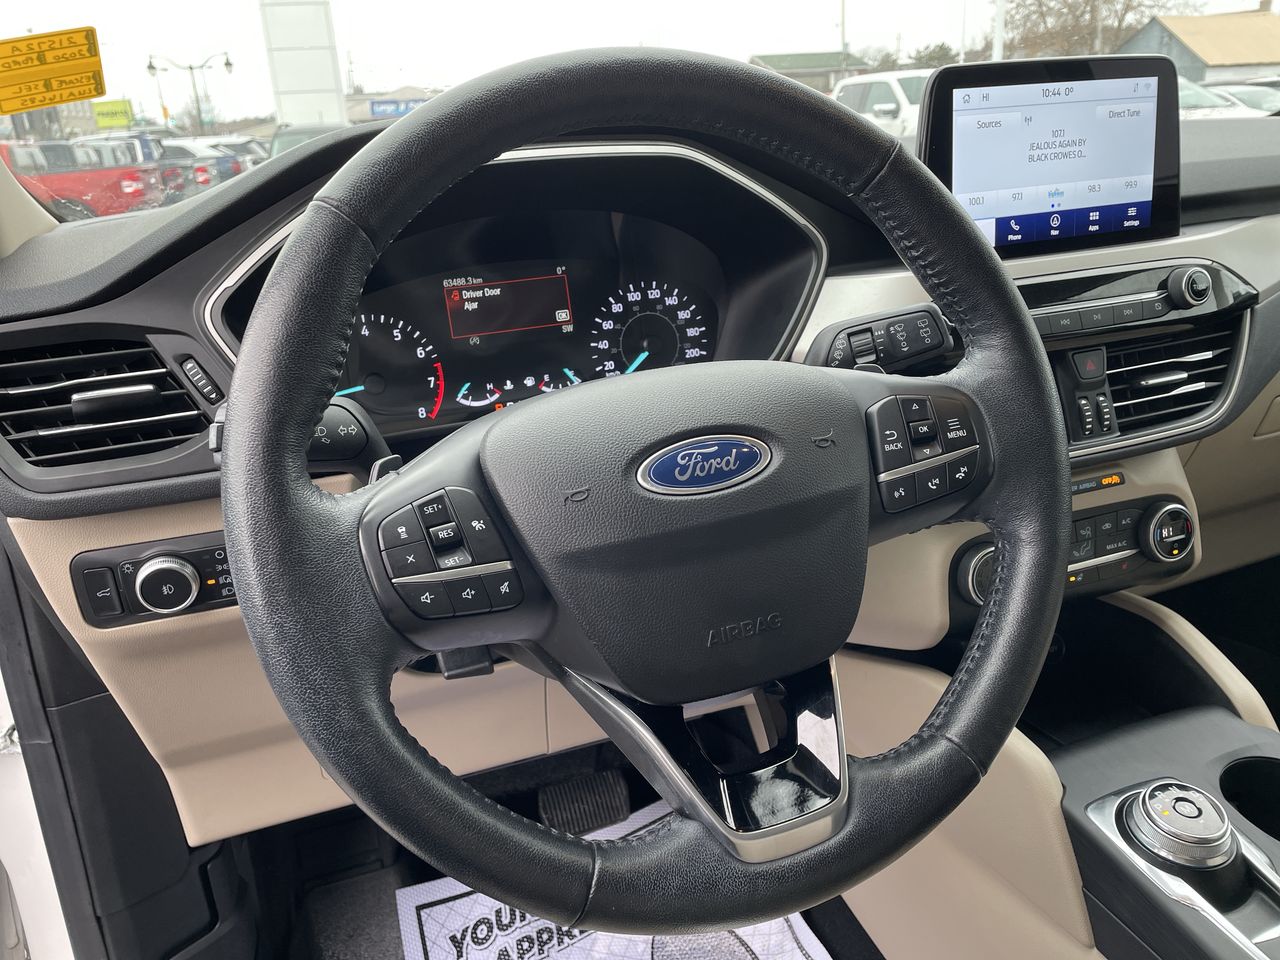 2020 Ford Escape - 21572A Full Image 14